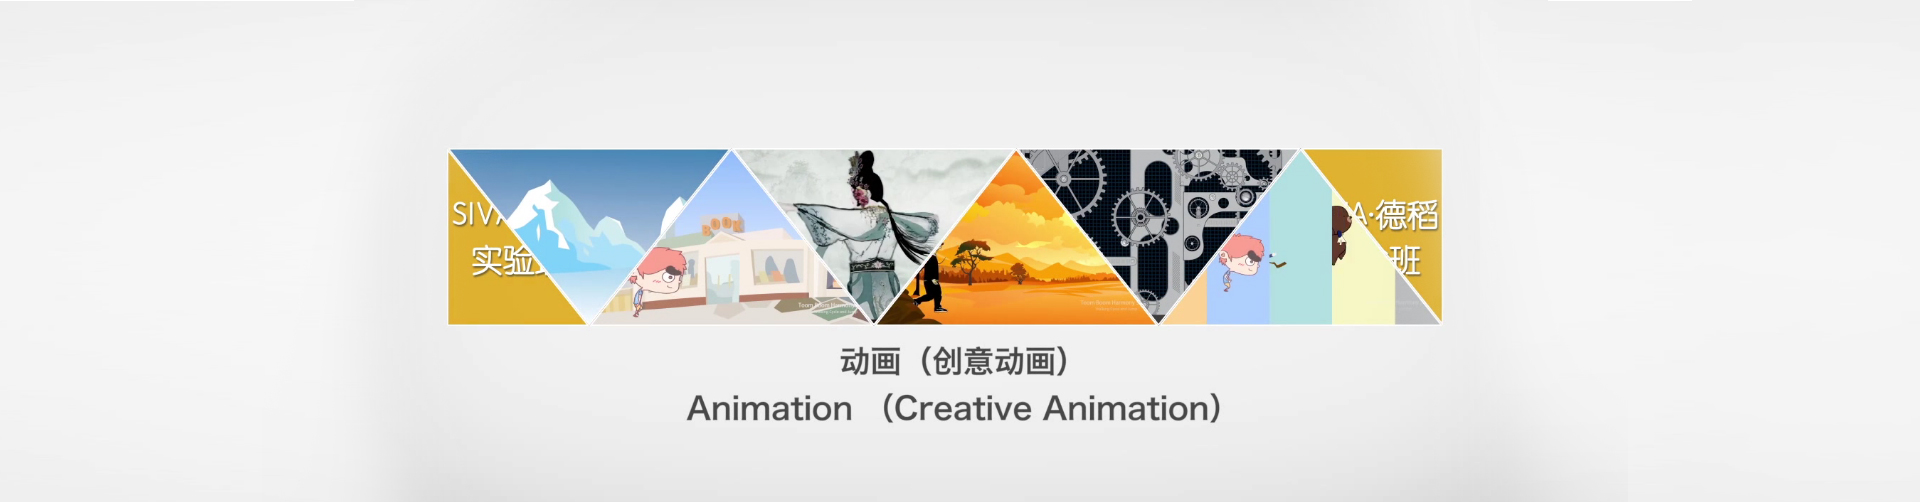 Creative Animation